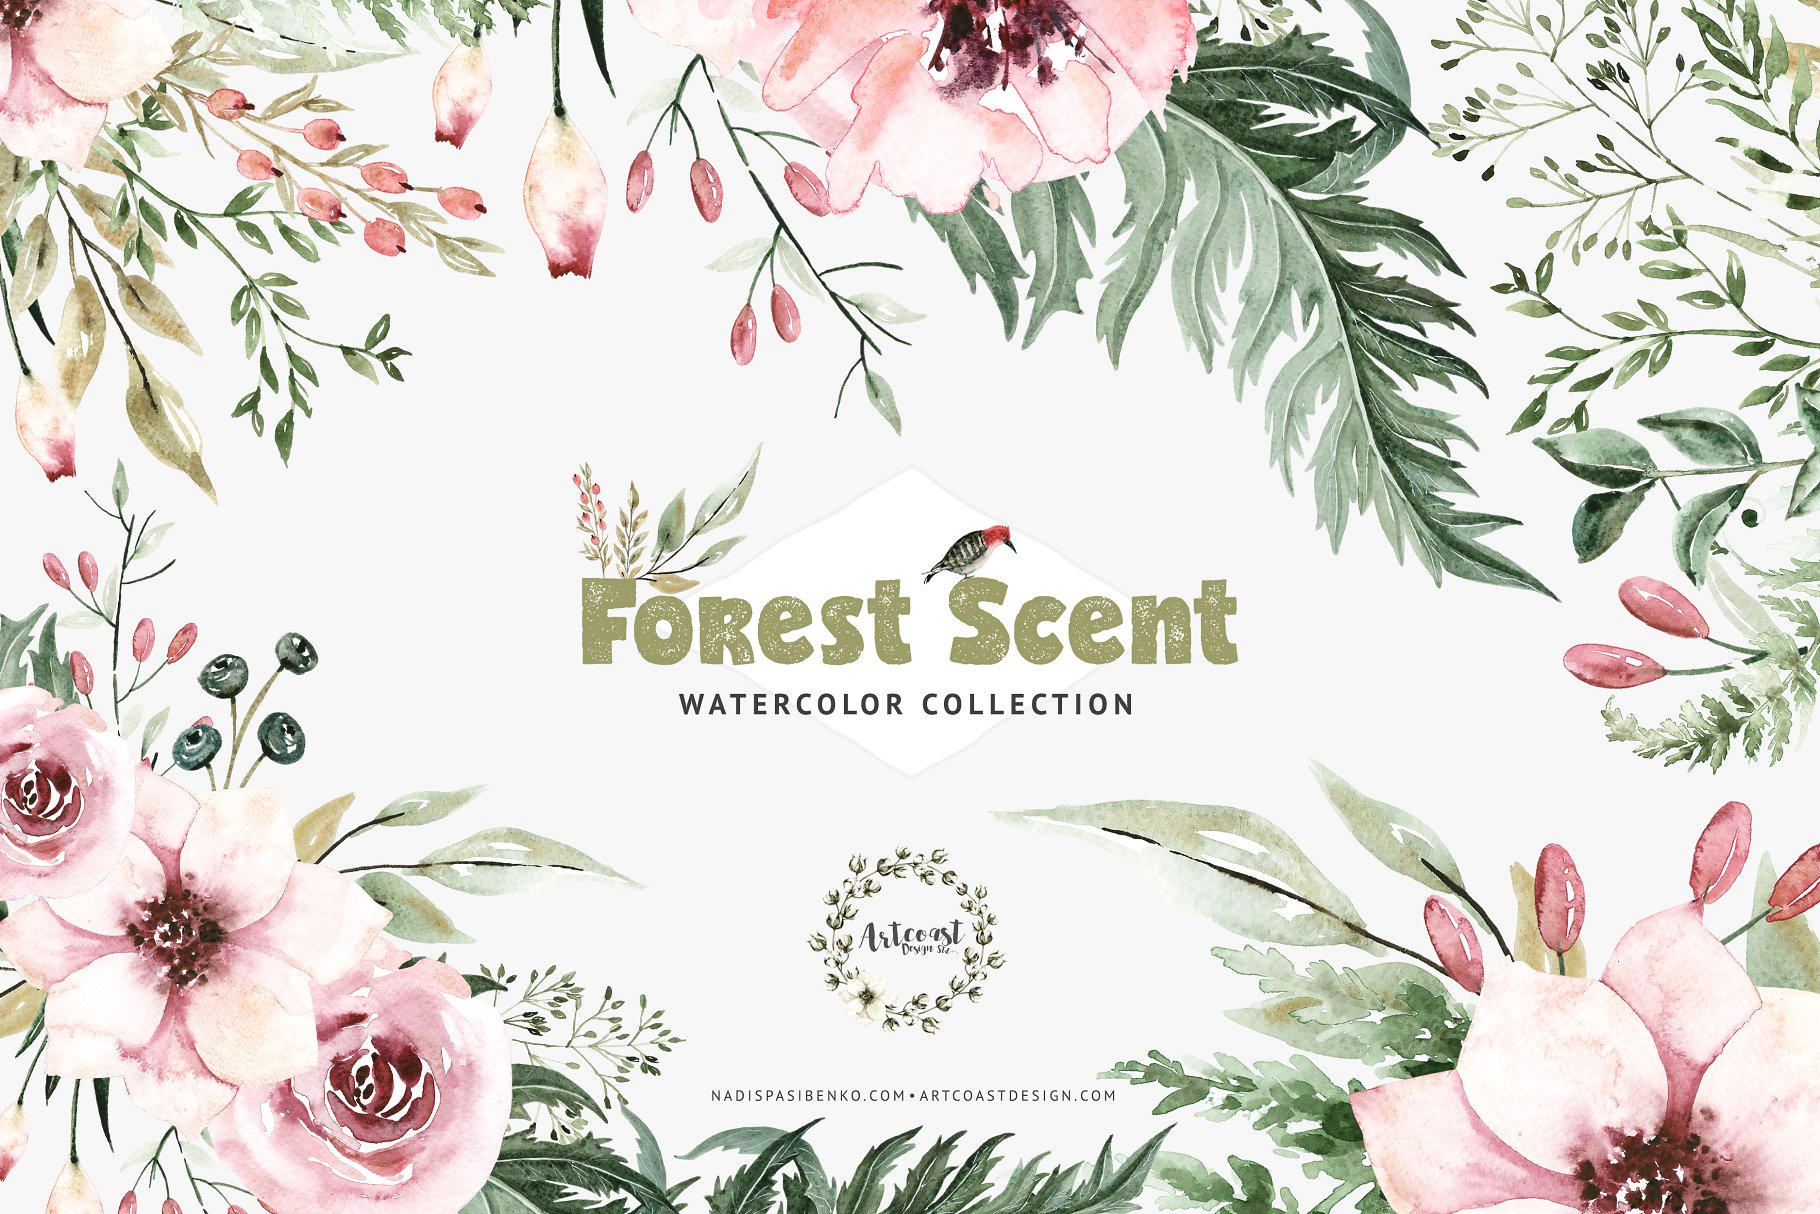 森林的气息水彩剪贴画元素 Watercolor Forest Scent插图